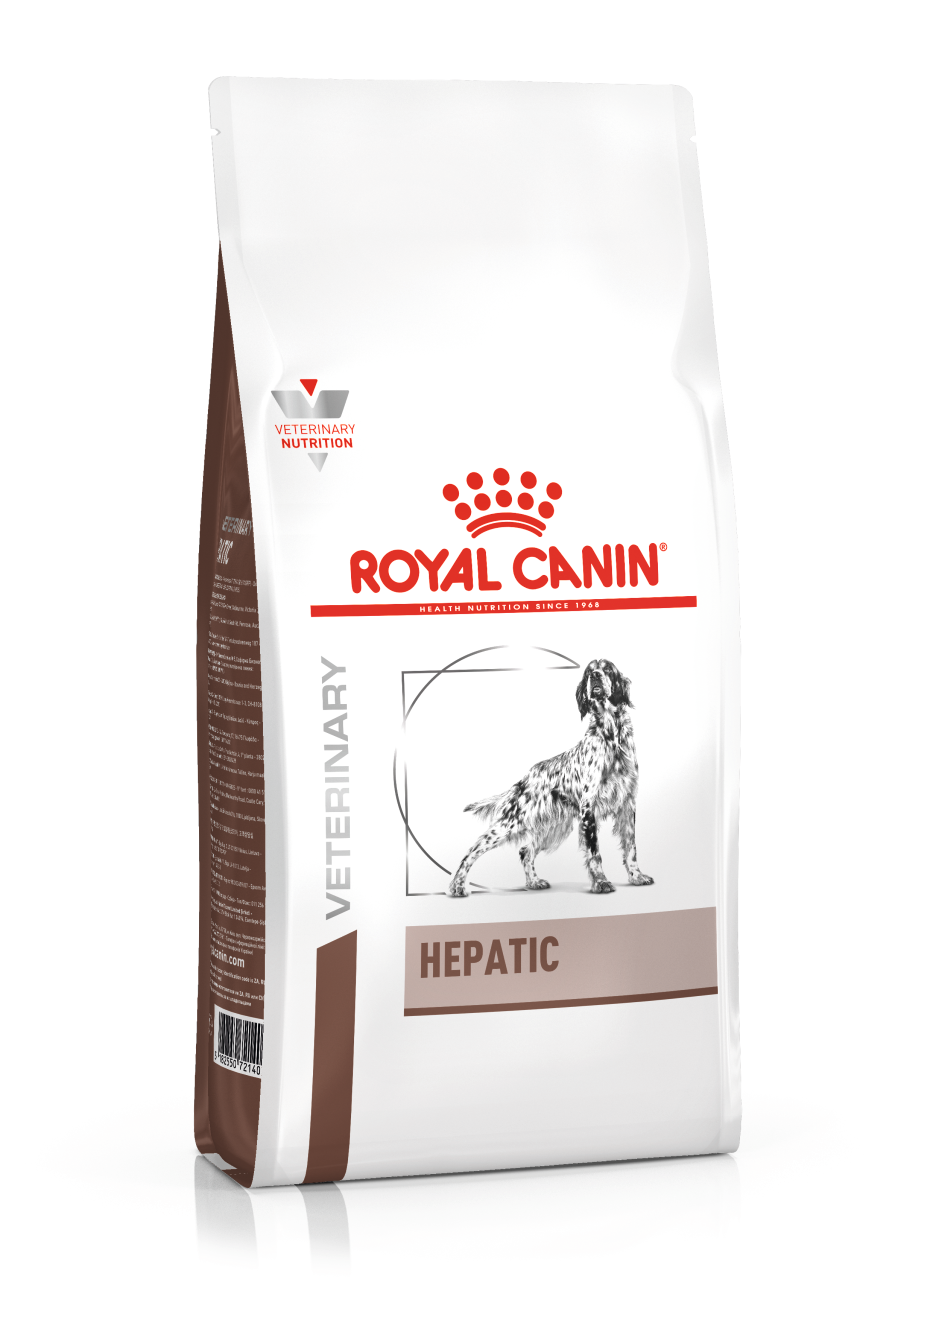 Royal Canin Hepatic hond 1 x 6 kg